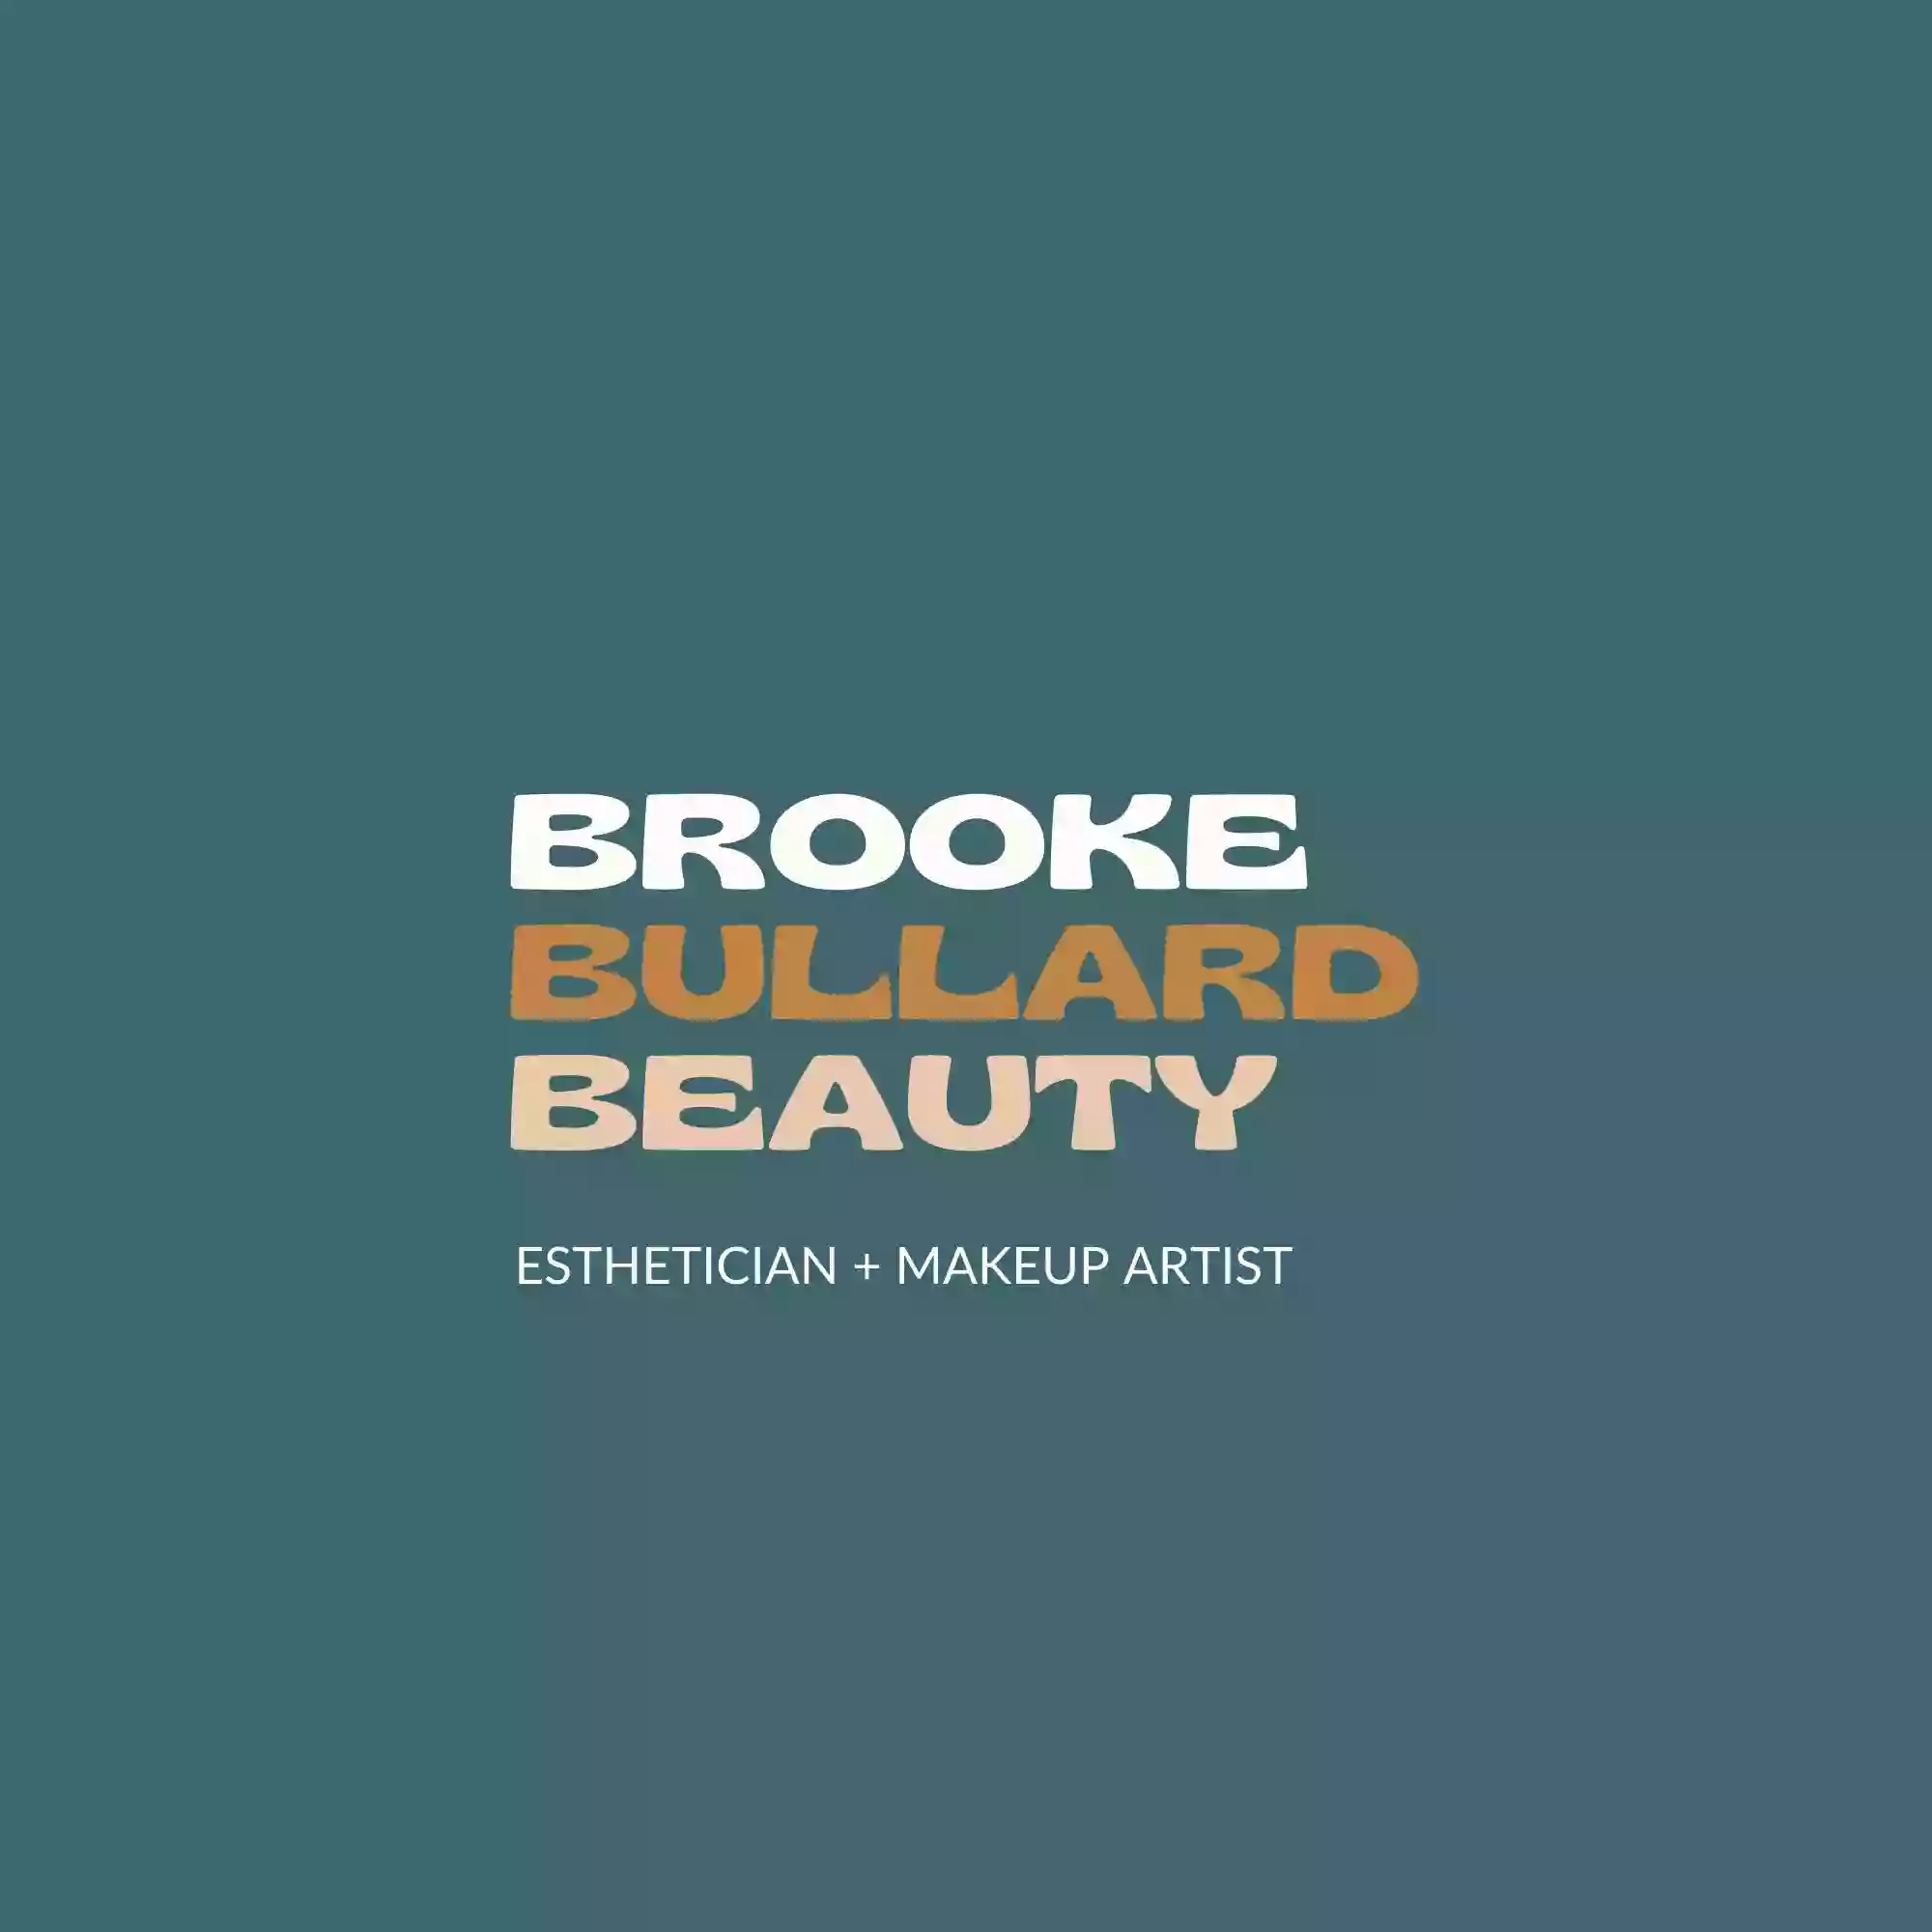 Brooke Bullard Beauty